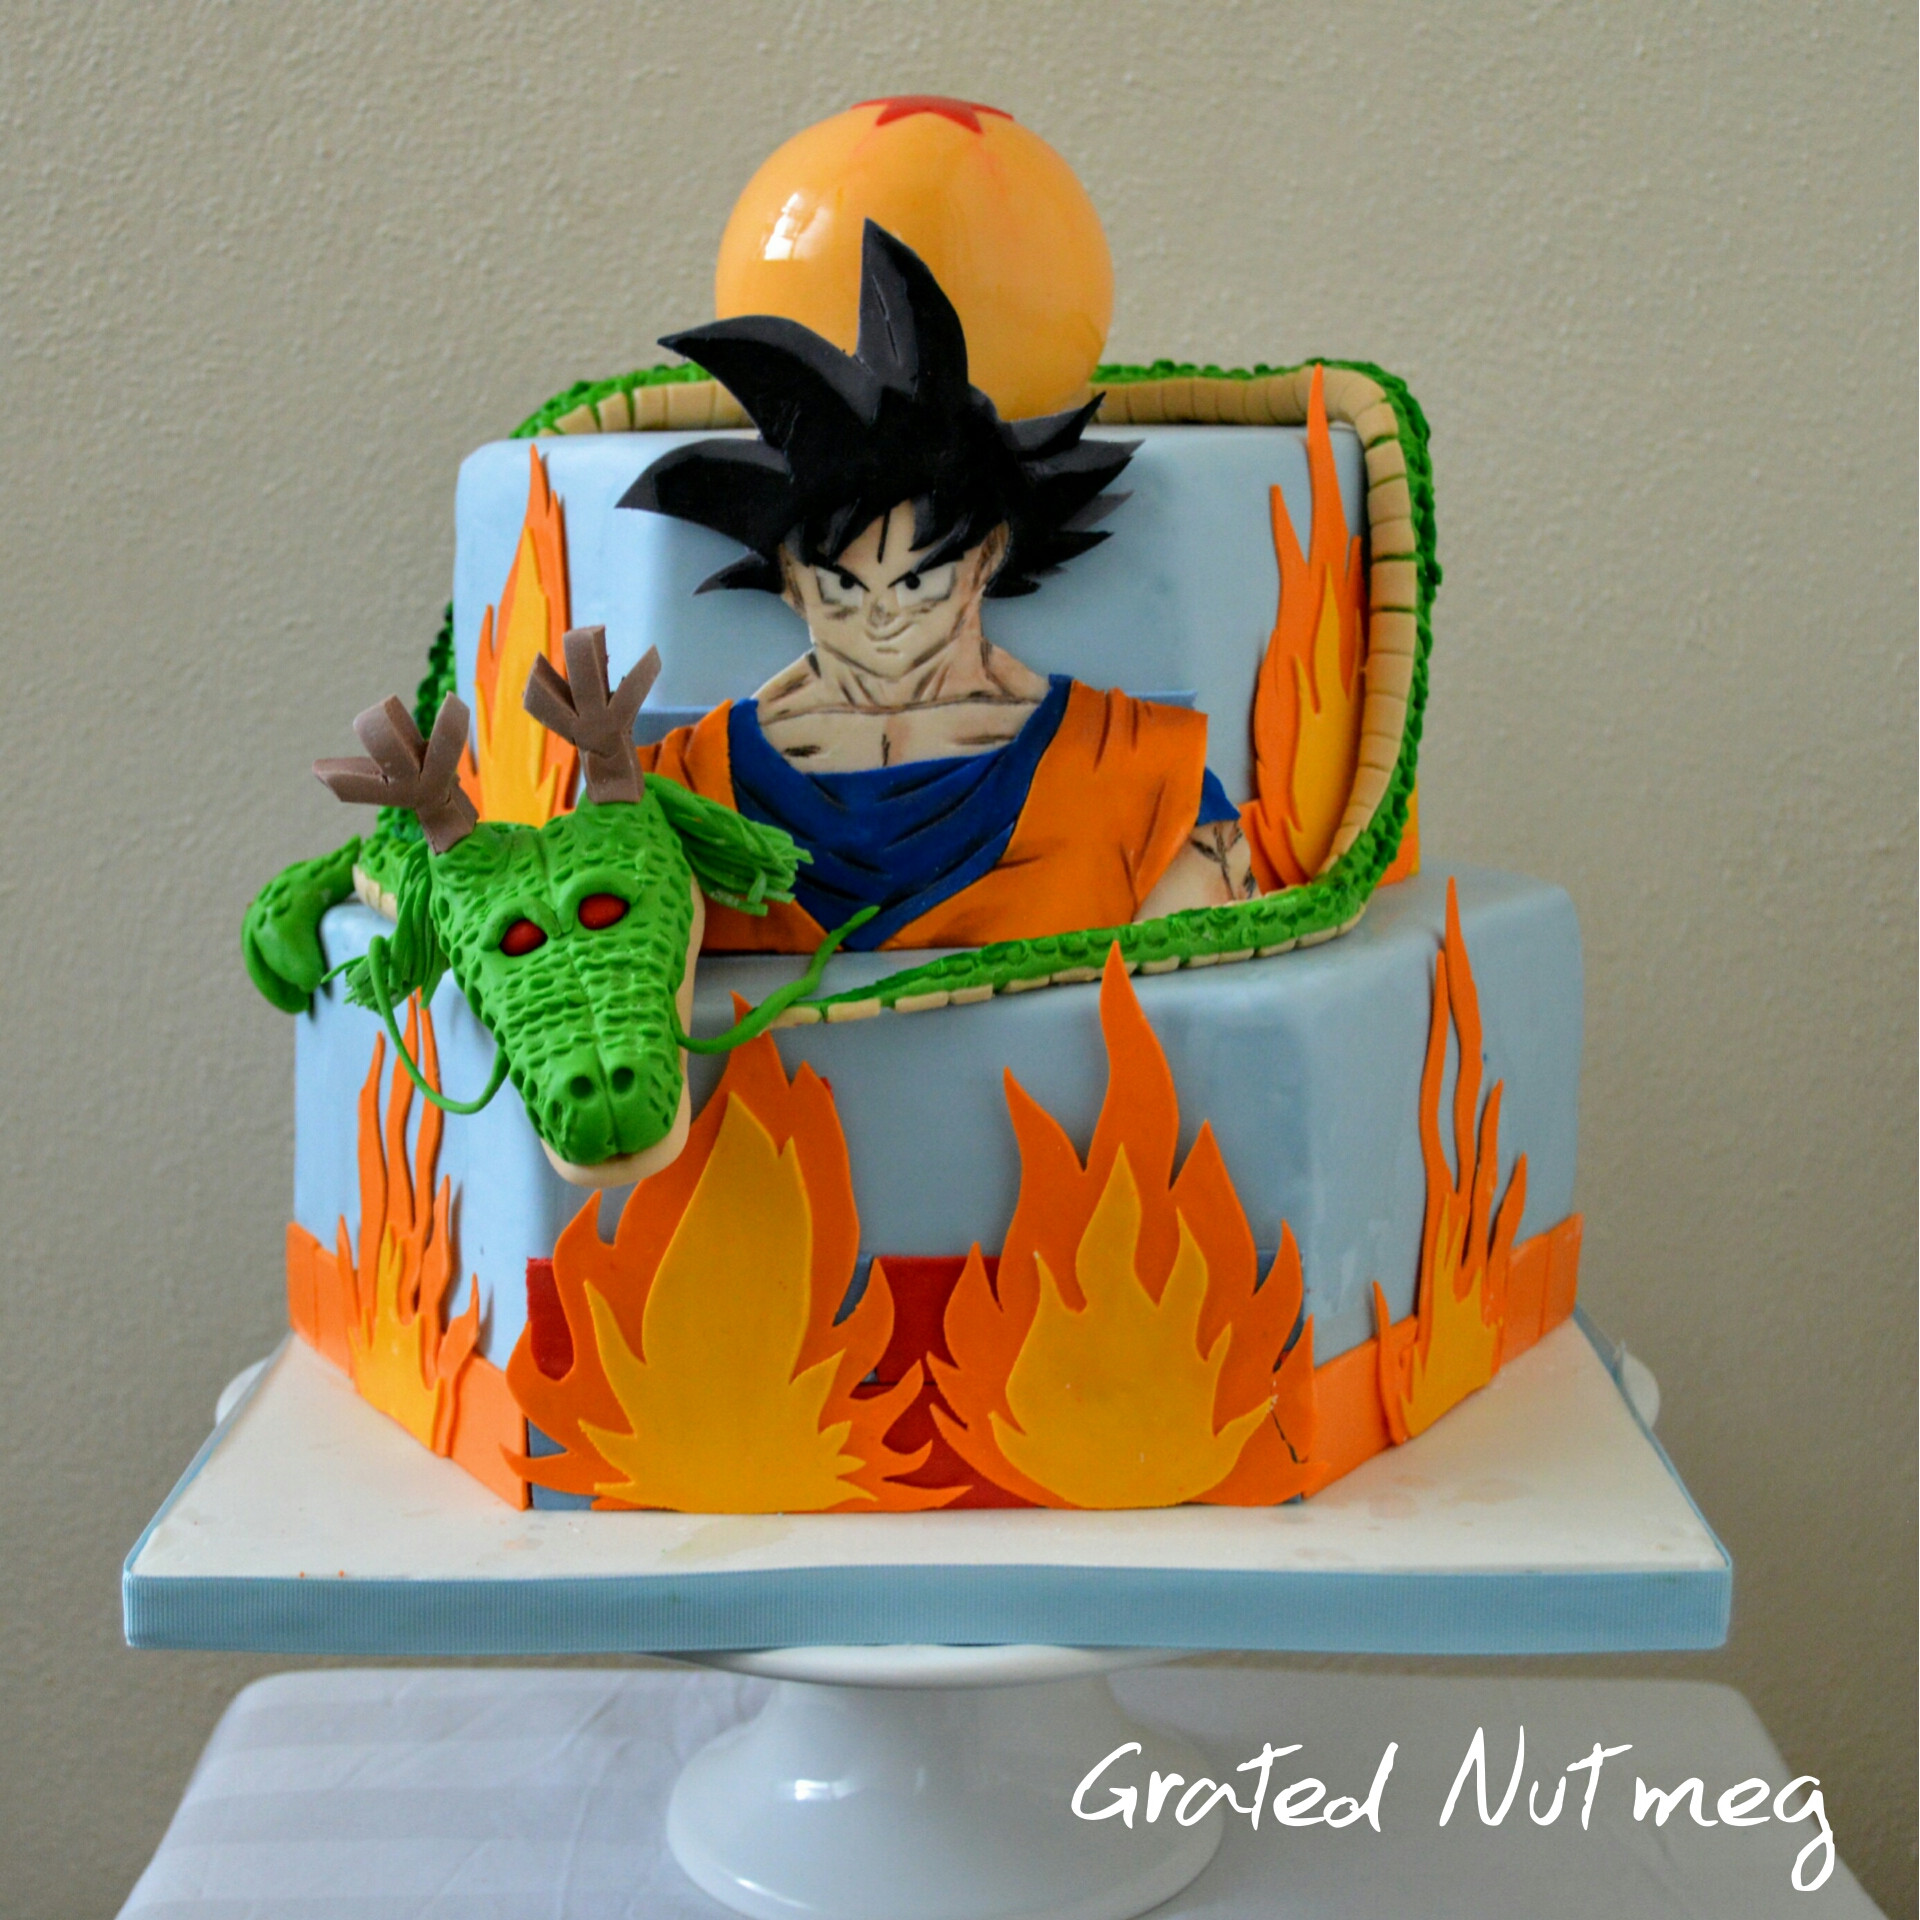 Dragon Ball Z Birthday Cake
 Dragon Ball Z Cake – Grated Nutmeg